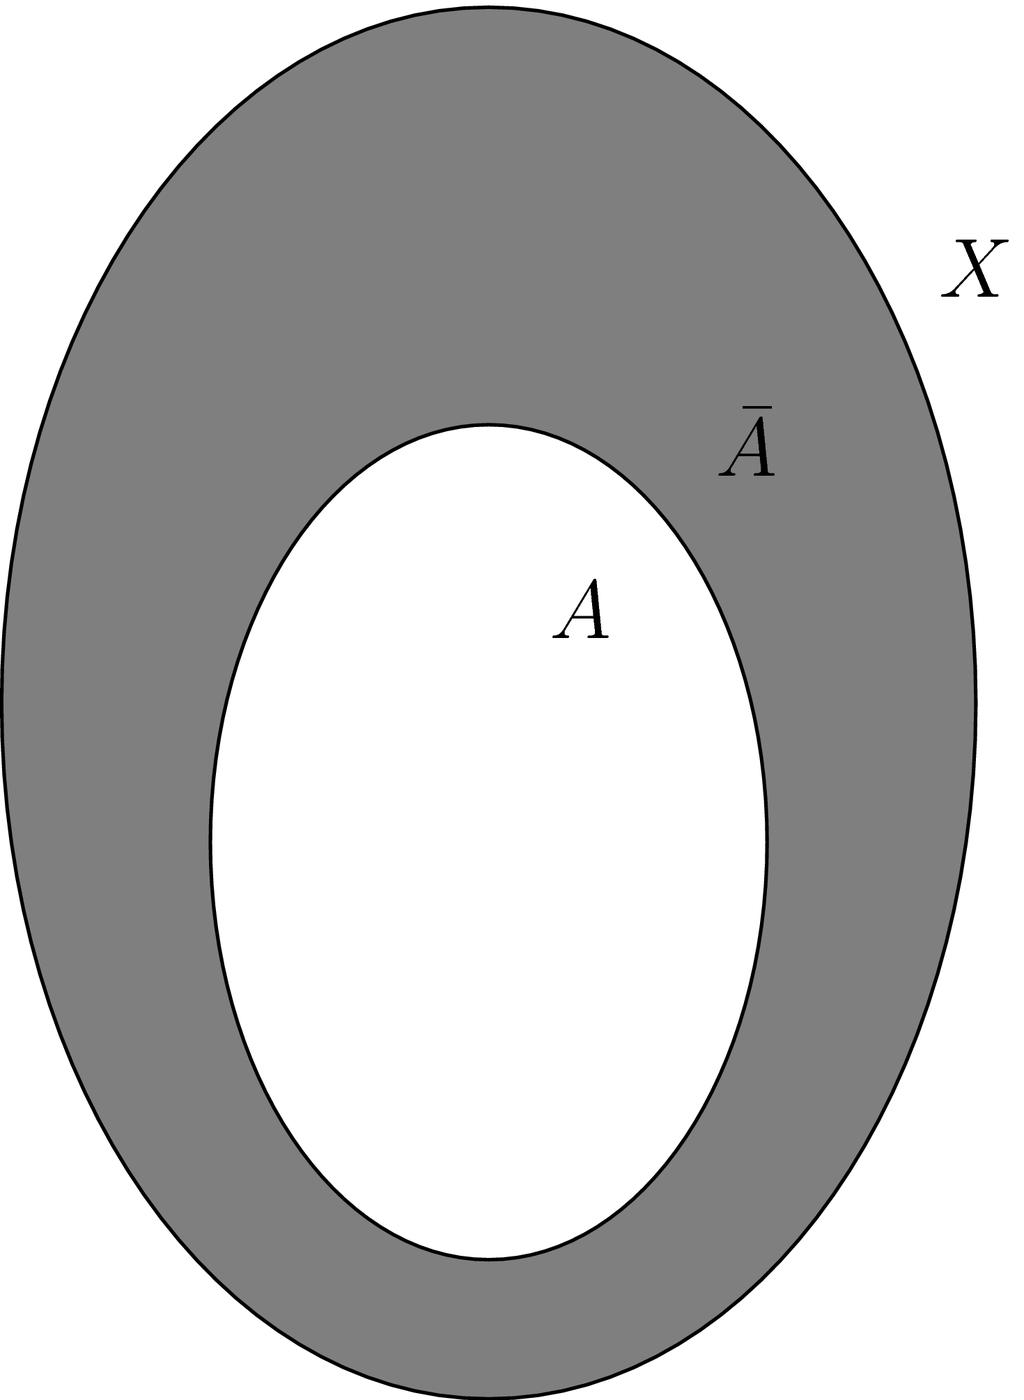 76 GLAVA 4. SKUPOVI I RELACIJE Slika 4.5: Dijagram skupa A (B C) Slika 4.6: Dijagram skupa (A B) (A C) n Ponekad se za uniju ili presek skupova koristi skraćeni zapis: k=1 A k = A 1 A 2.